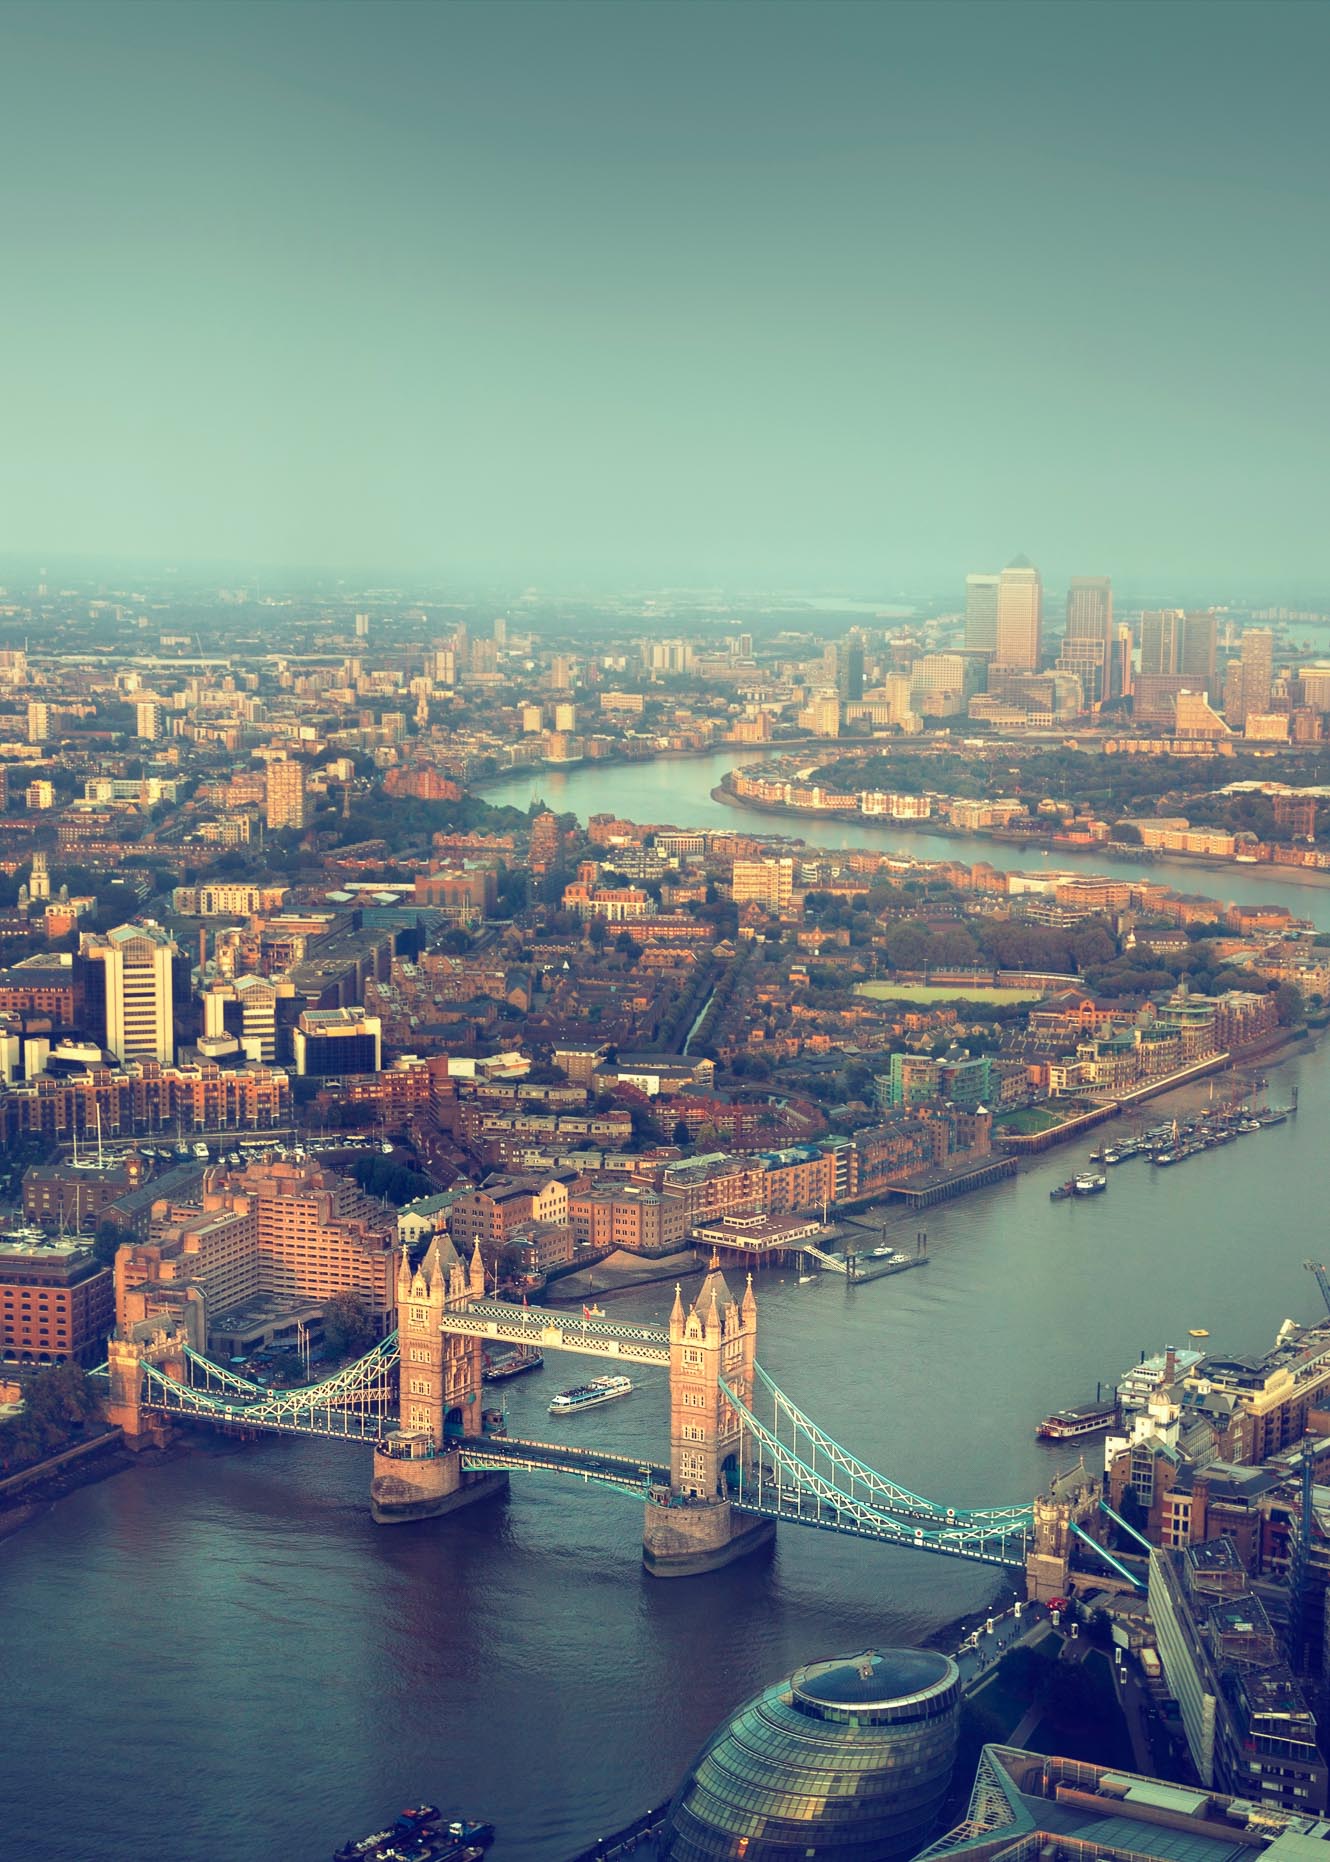 London (bridge) from above